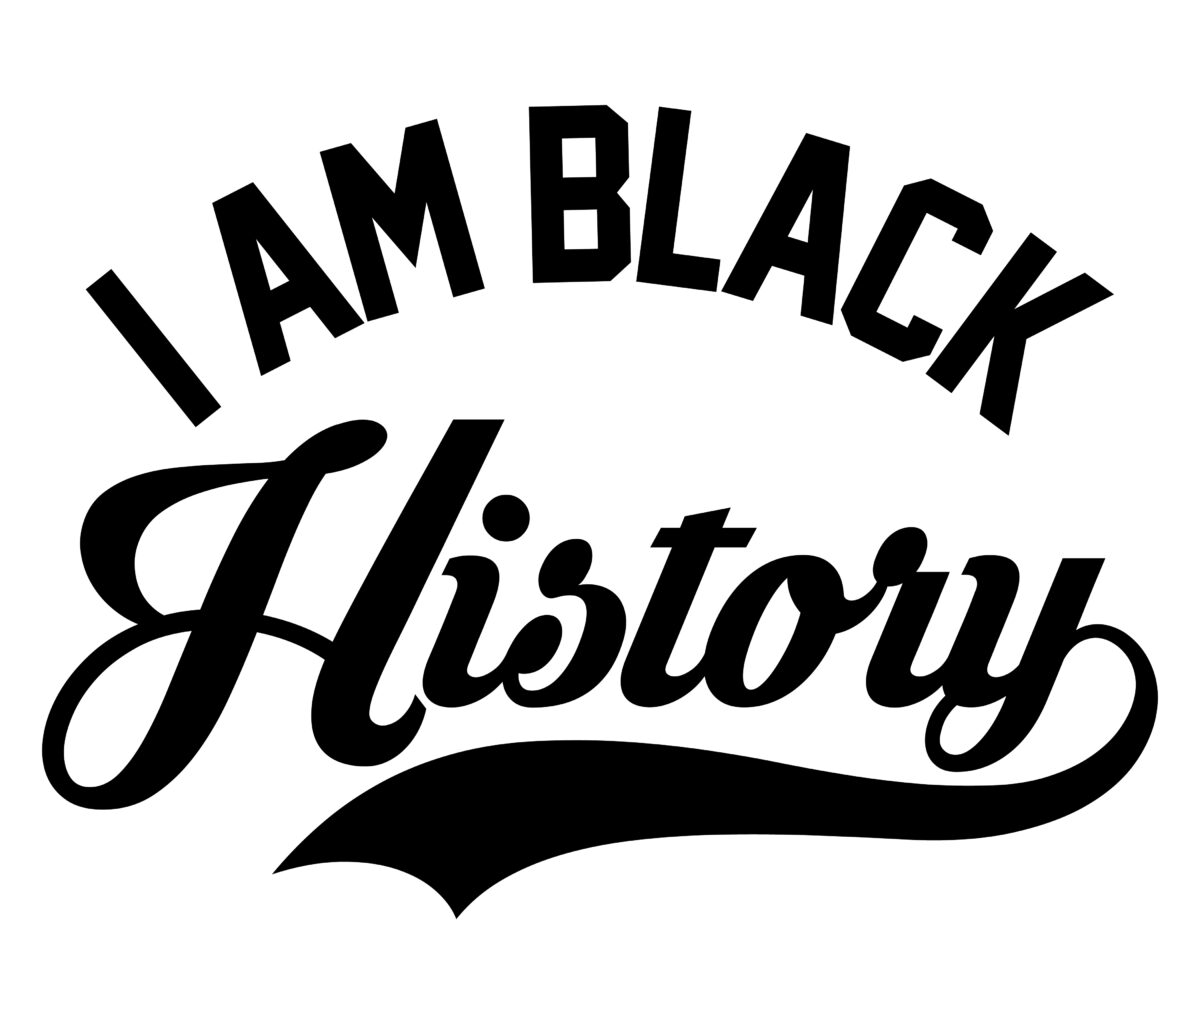 I am black history Svg